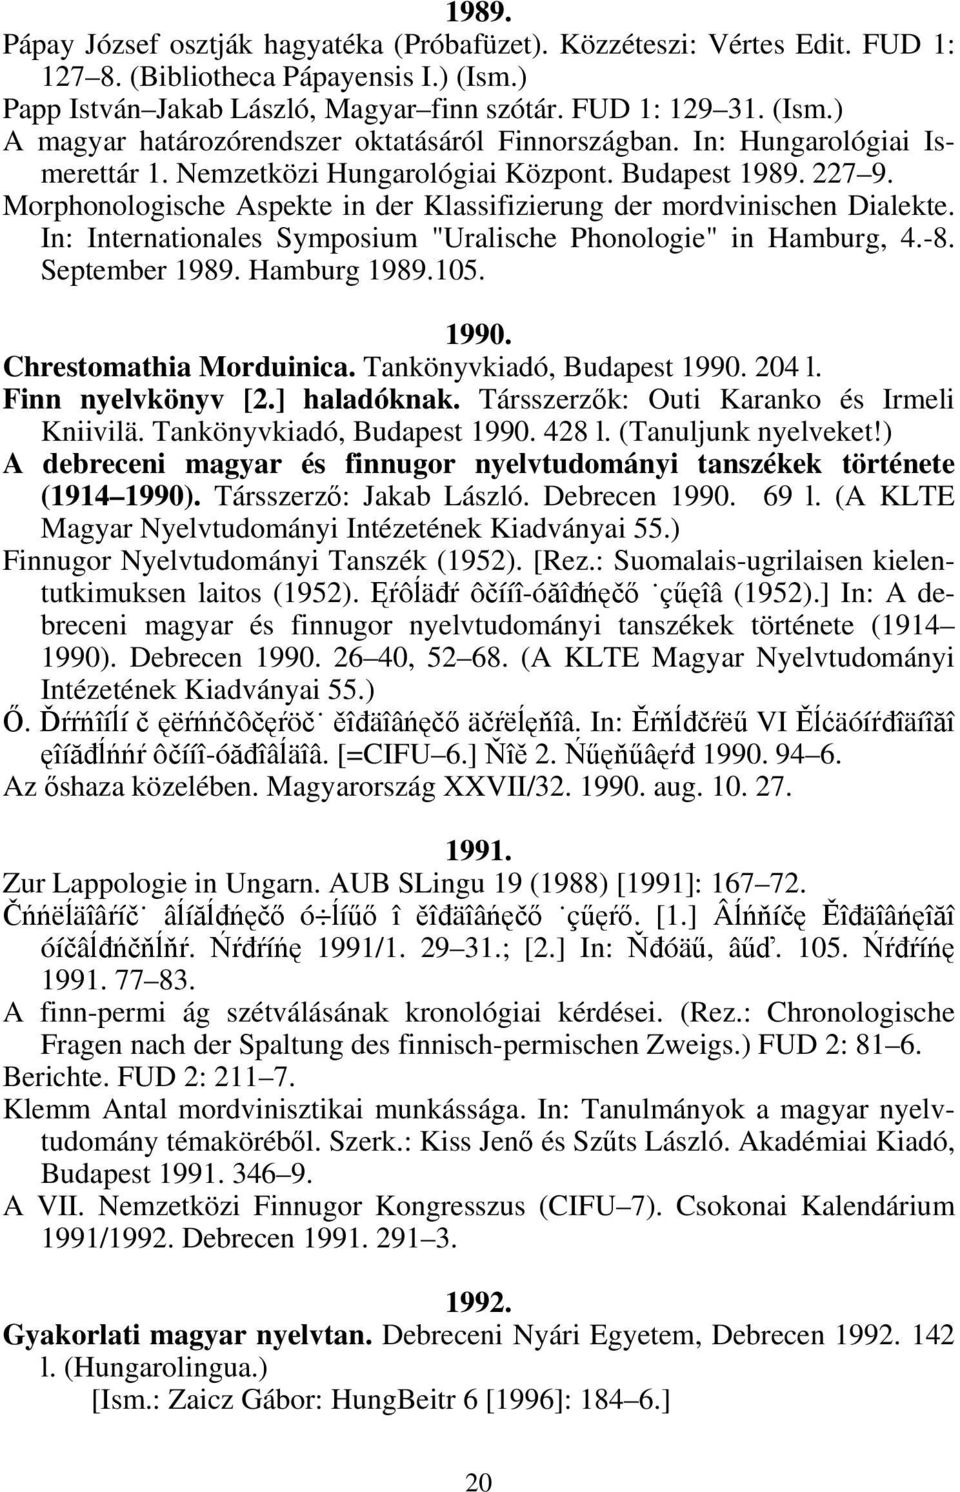 In: Internationales Symposium "Uralische Phonologie" in Hamburg, 4.-8. September 1989. Hamburg 1989.105. 1990. Chrestomathia Morduinica. Tankönyvkiadó, Budapest 1990. 204 l. Finn nyelvkönyv [2.